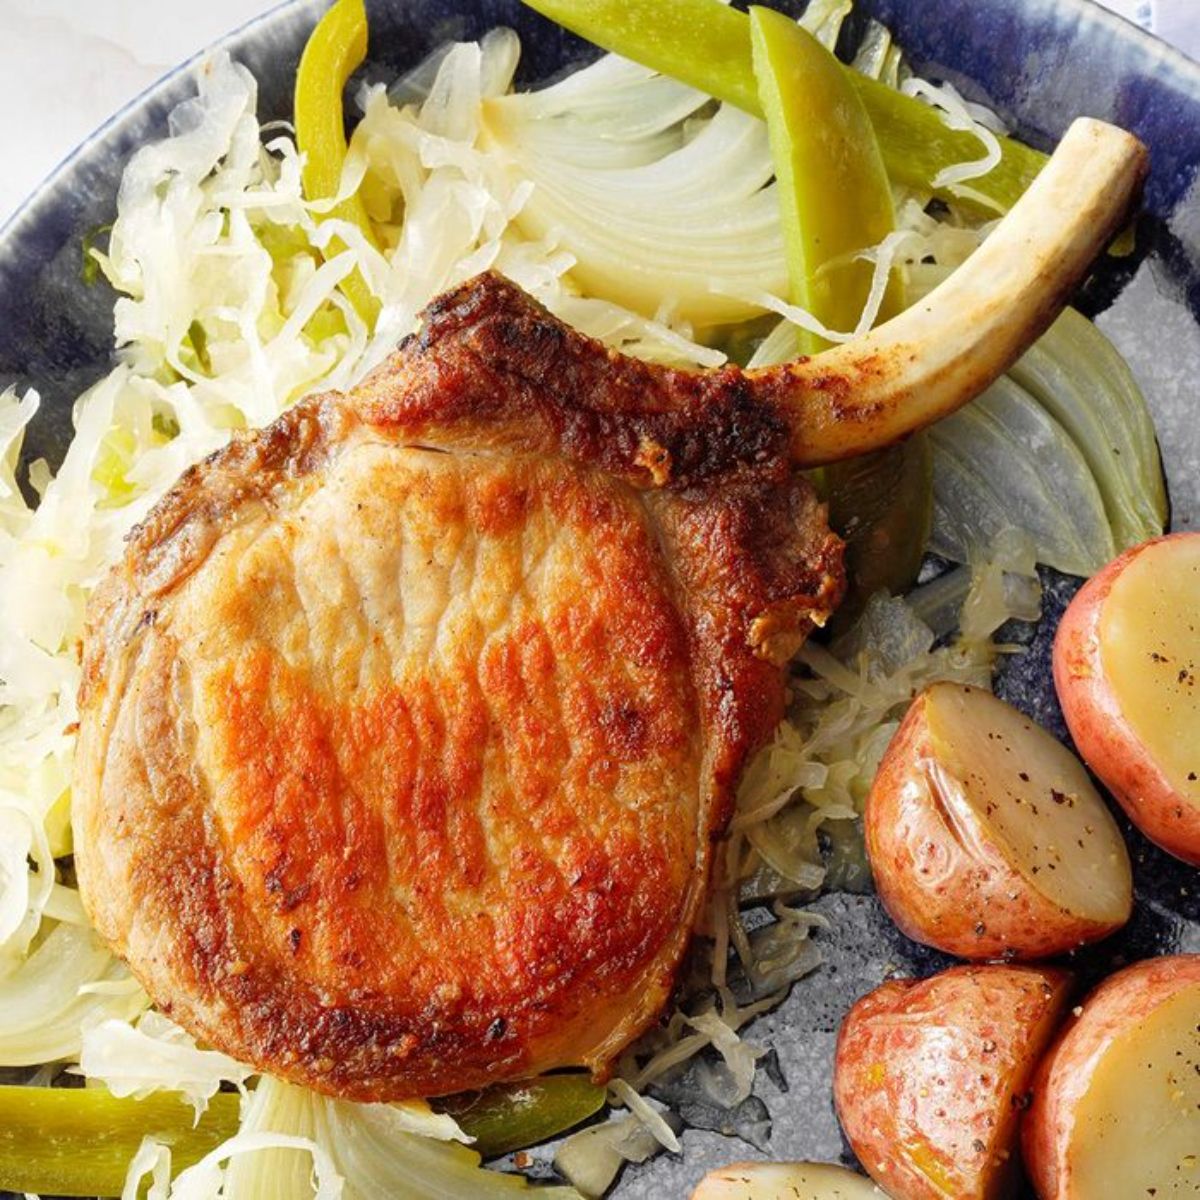 Pork chops with sauerkraut and potatoes on a blue plate.